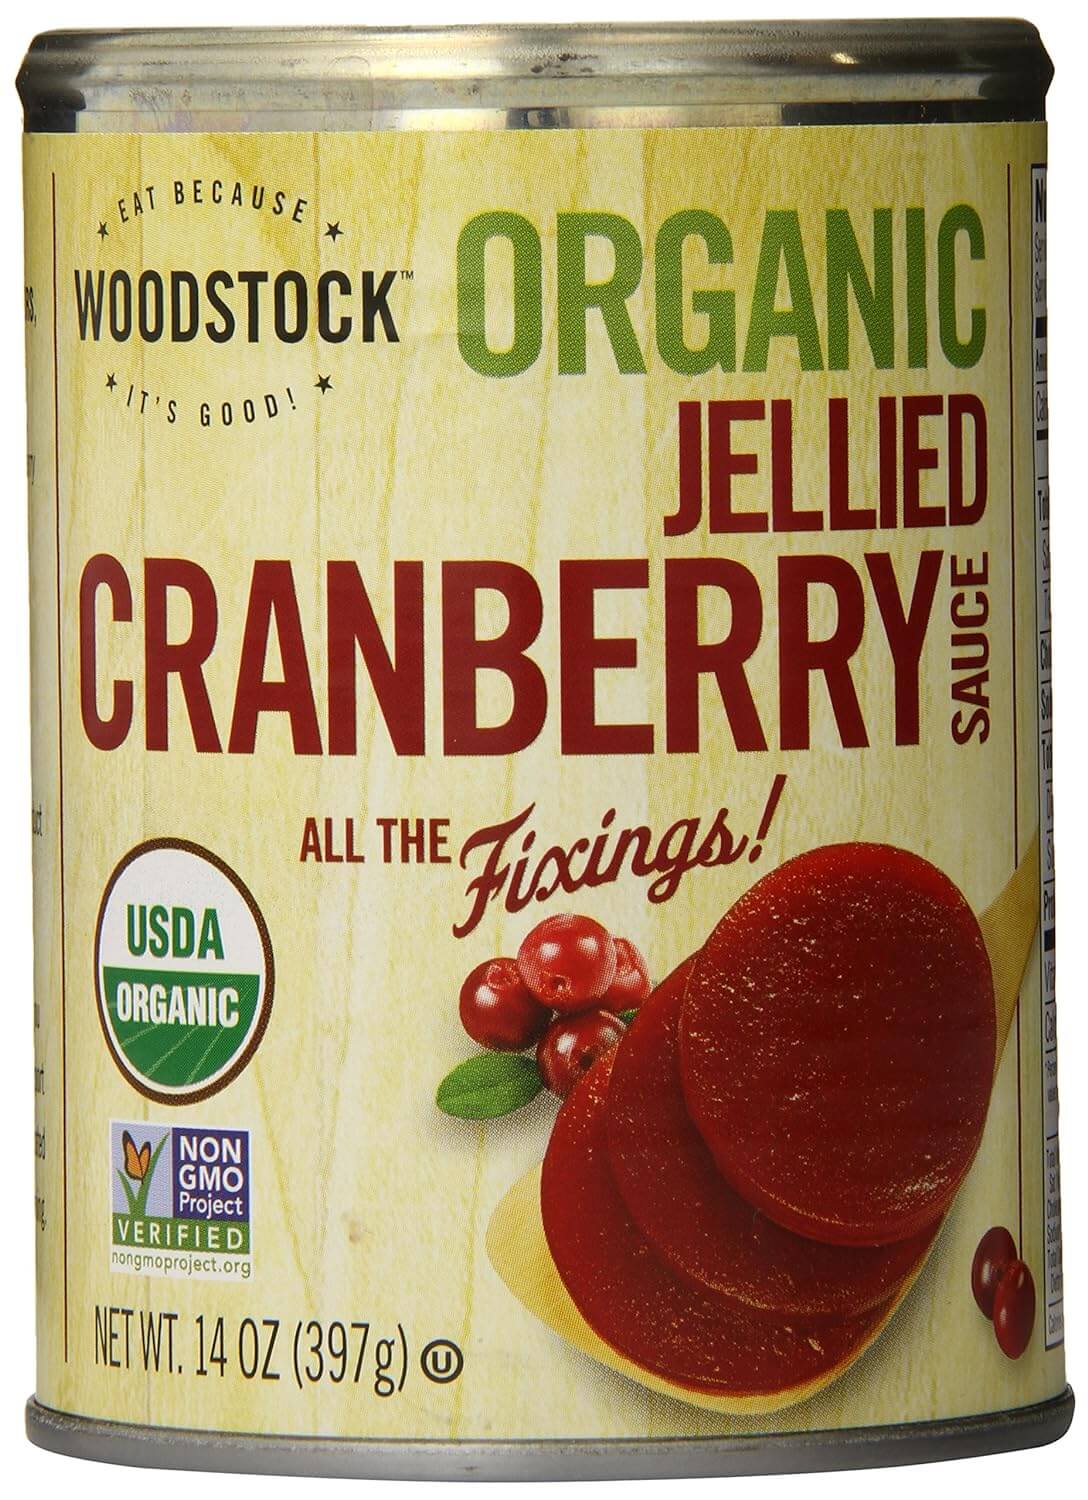 Woodstock Organic Jellied Cranberry Sauce